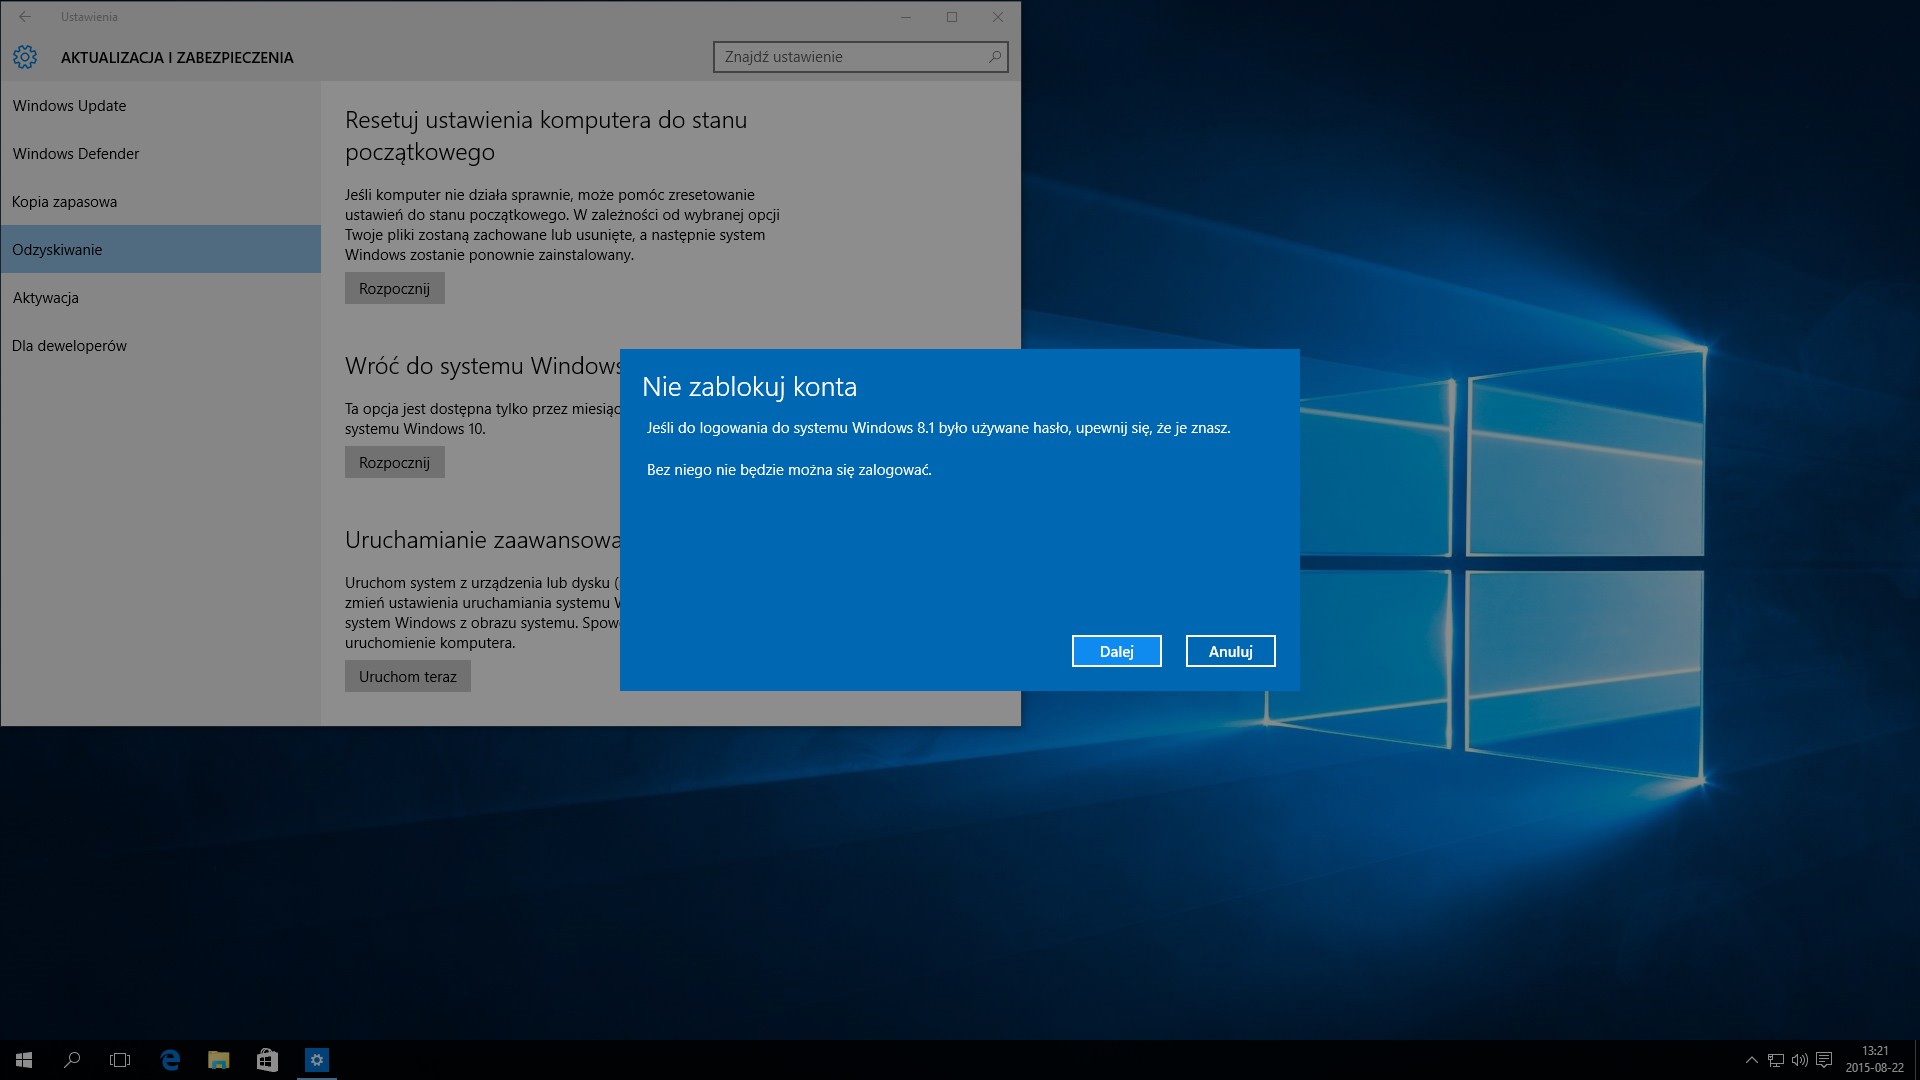 Wróć do systemu Windows 8.1